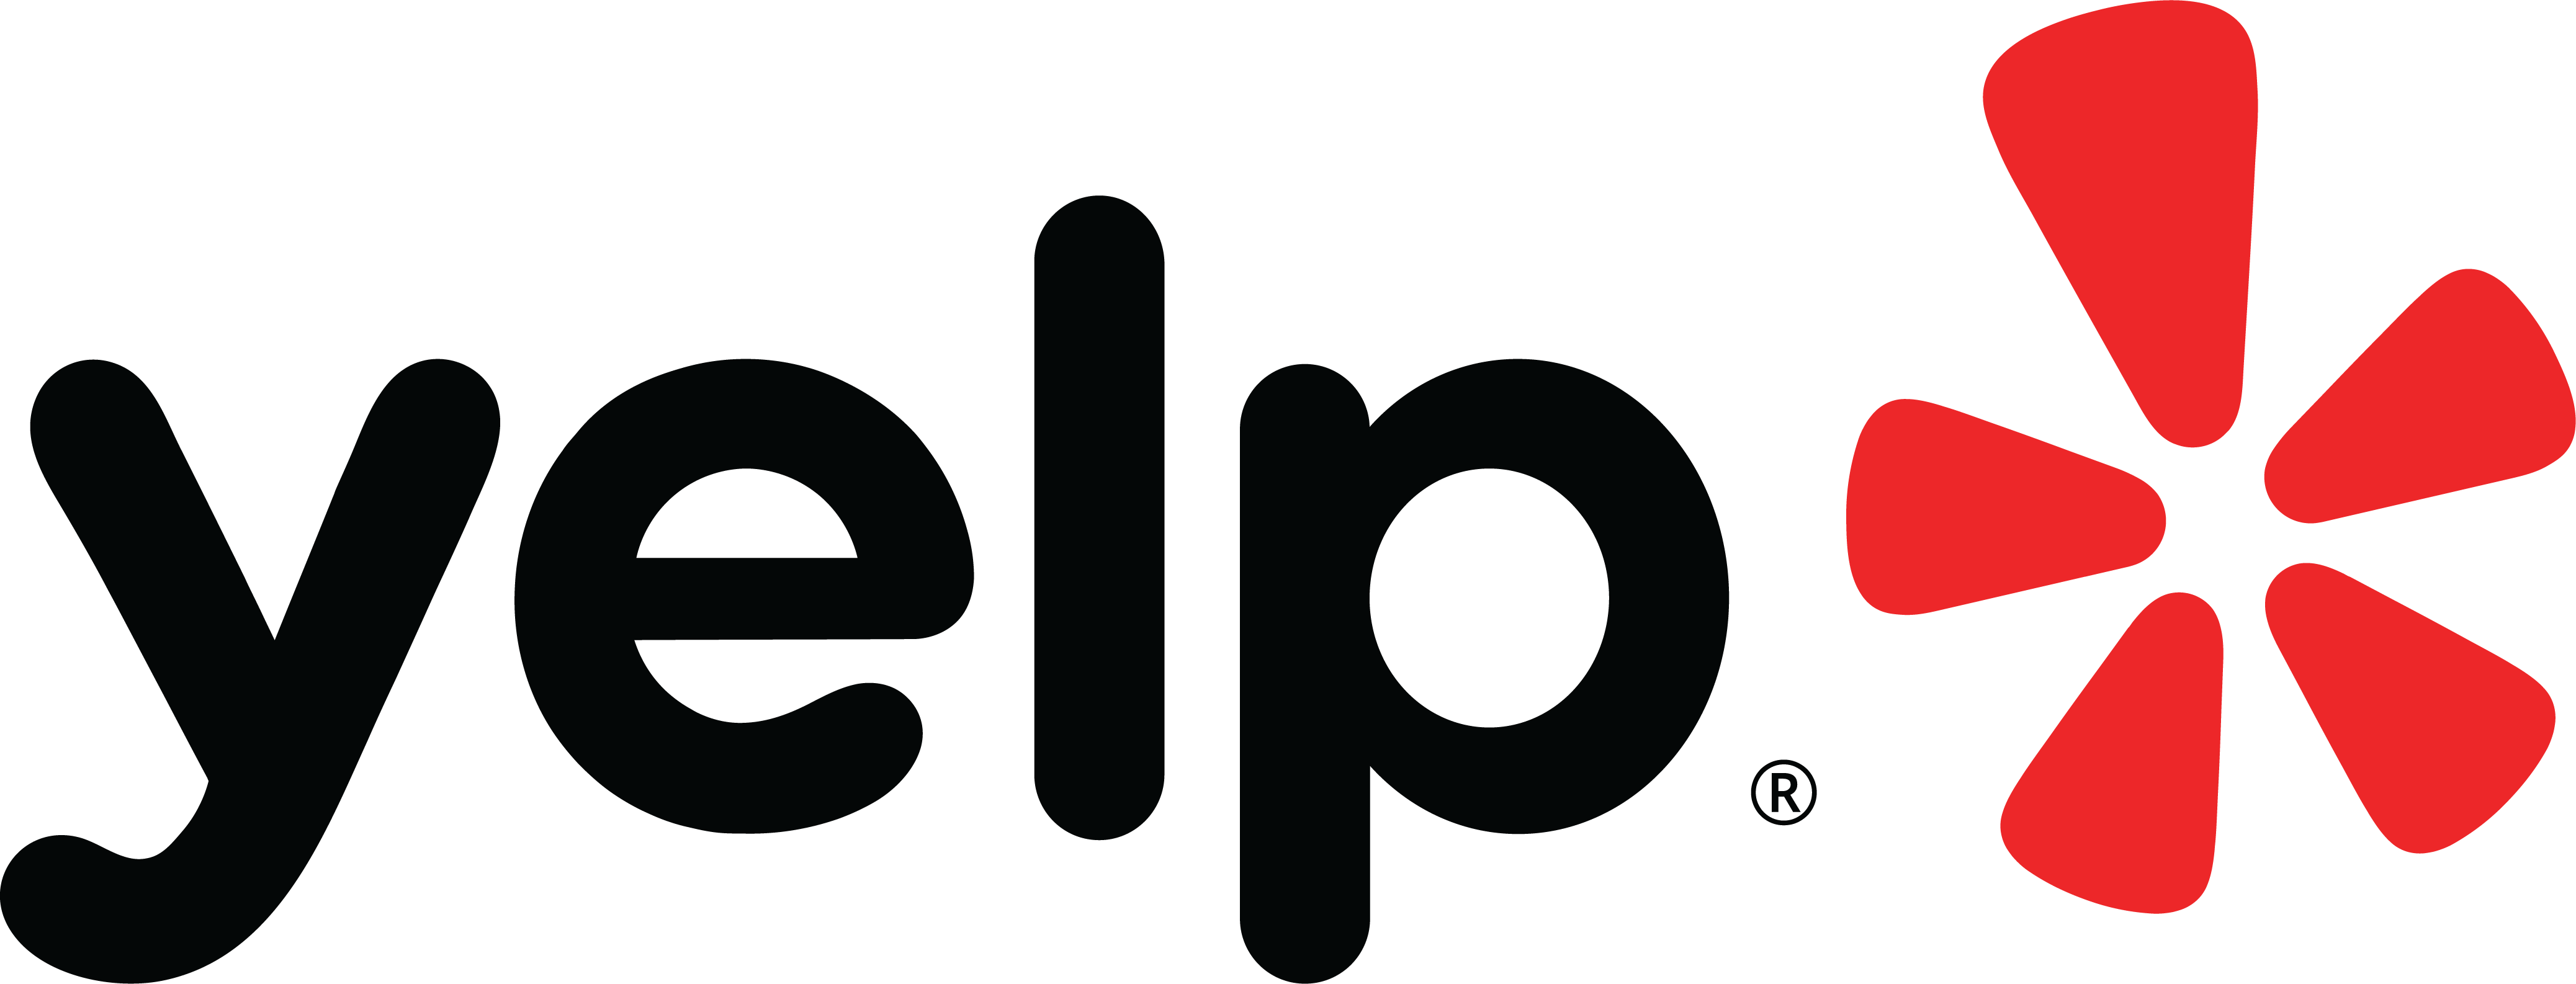 sponsor yelp logo